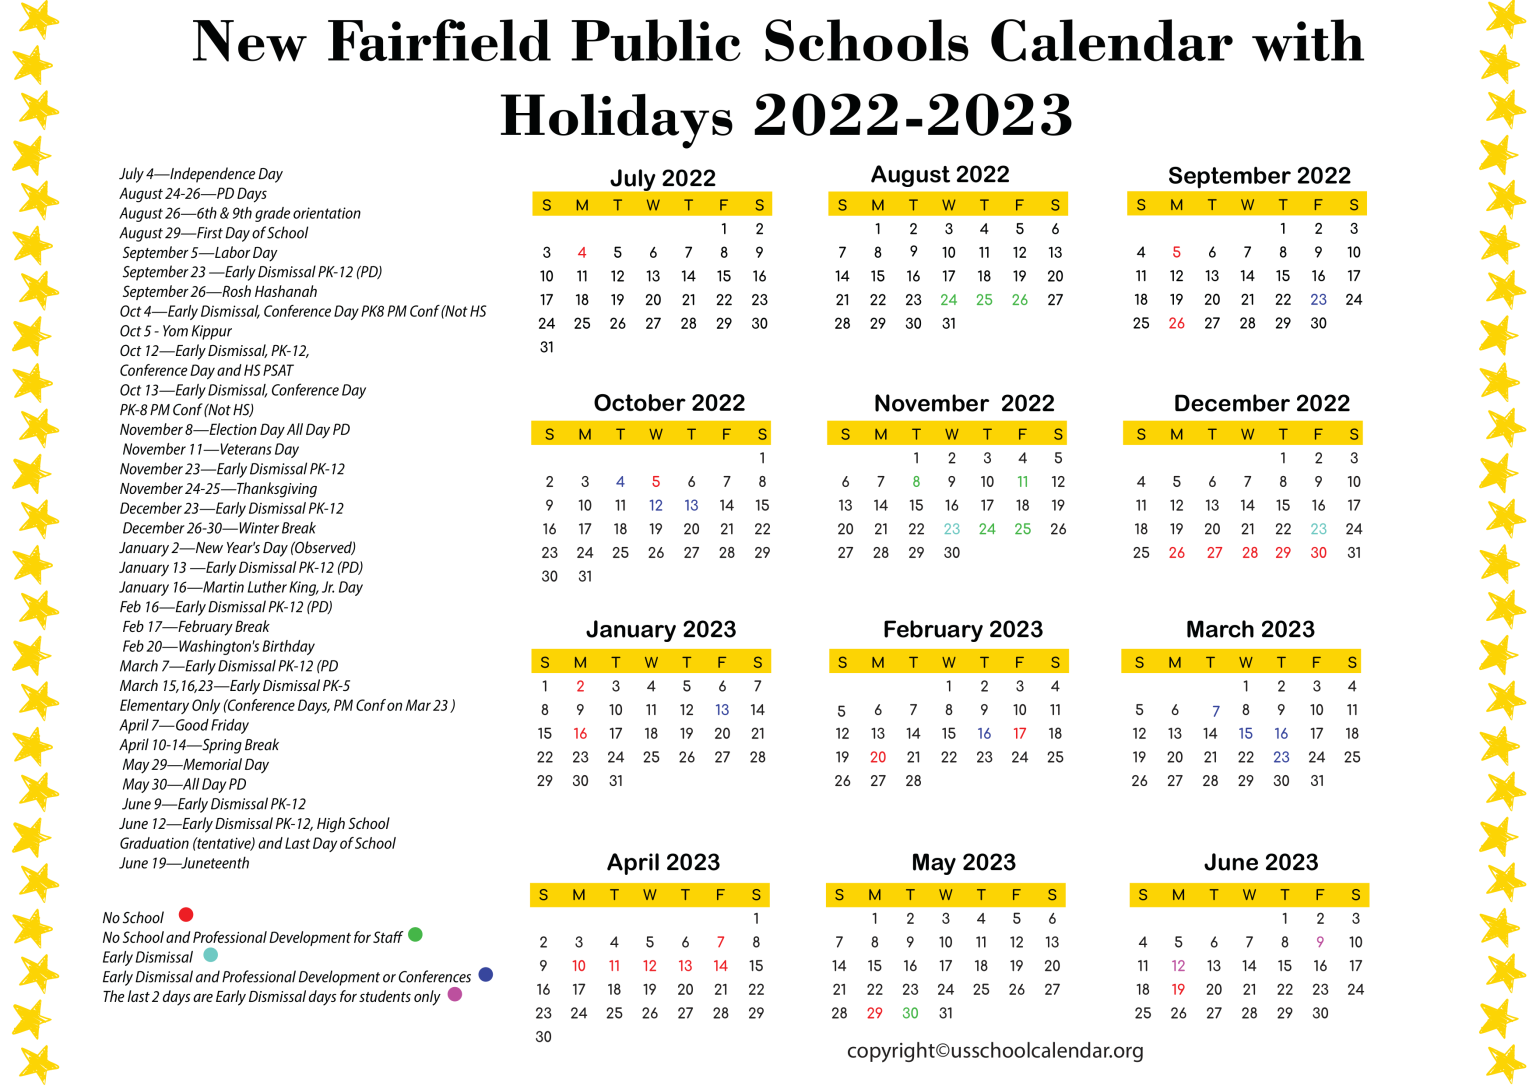 New Fairfield Public Schools Calendar with Holidays 2023